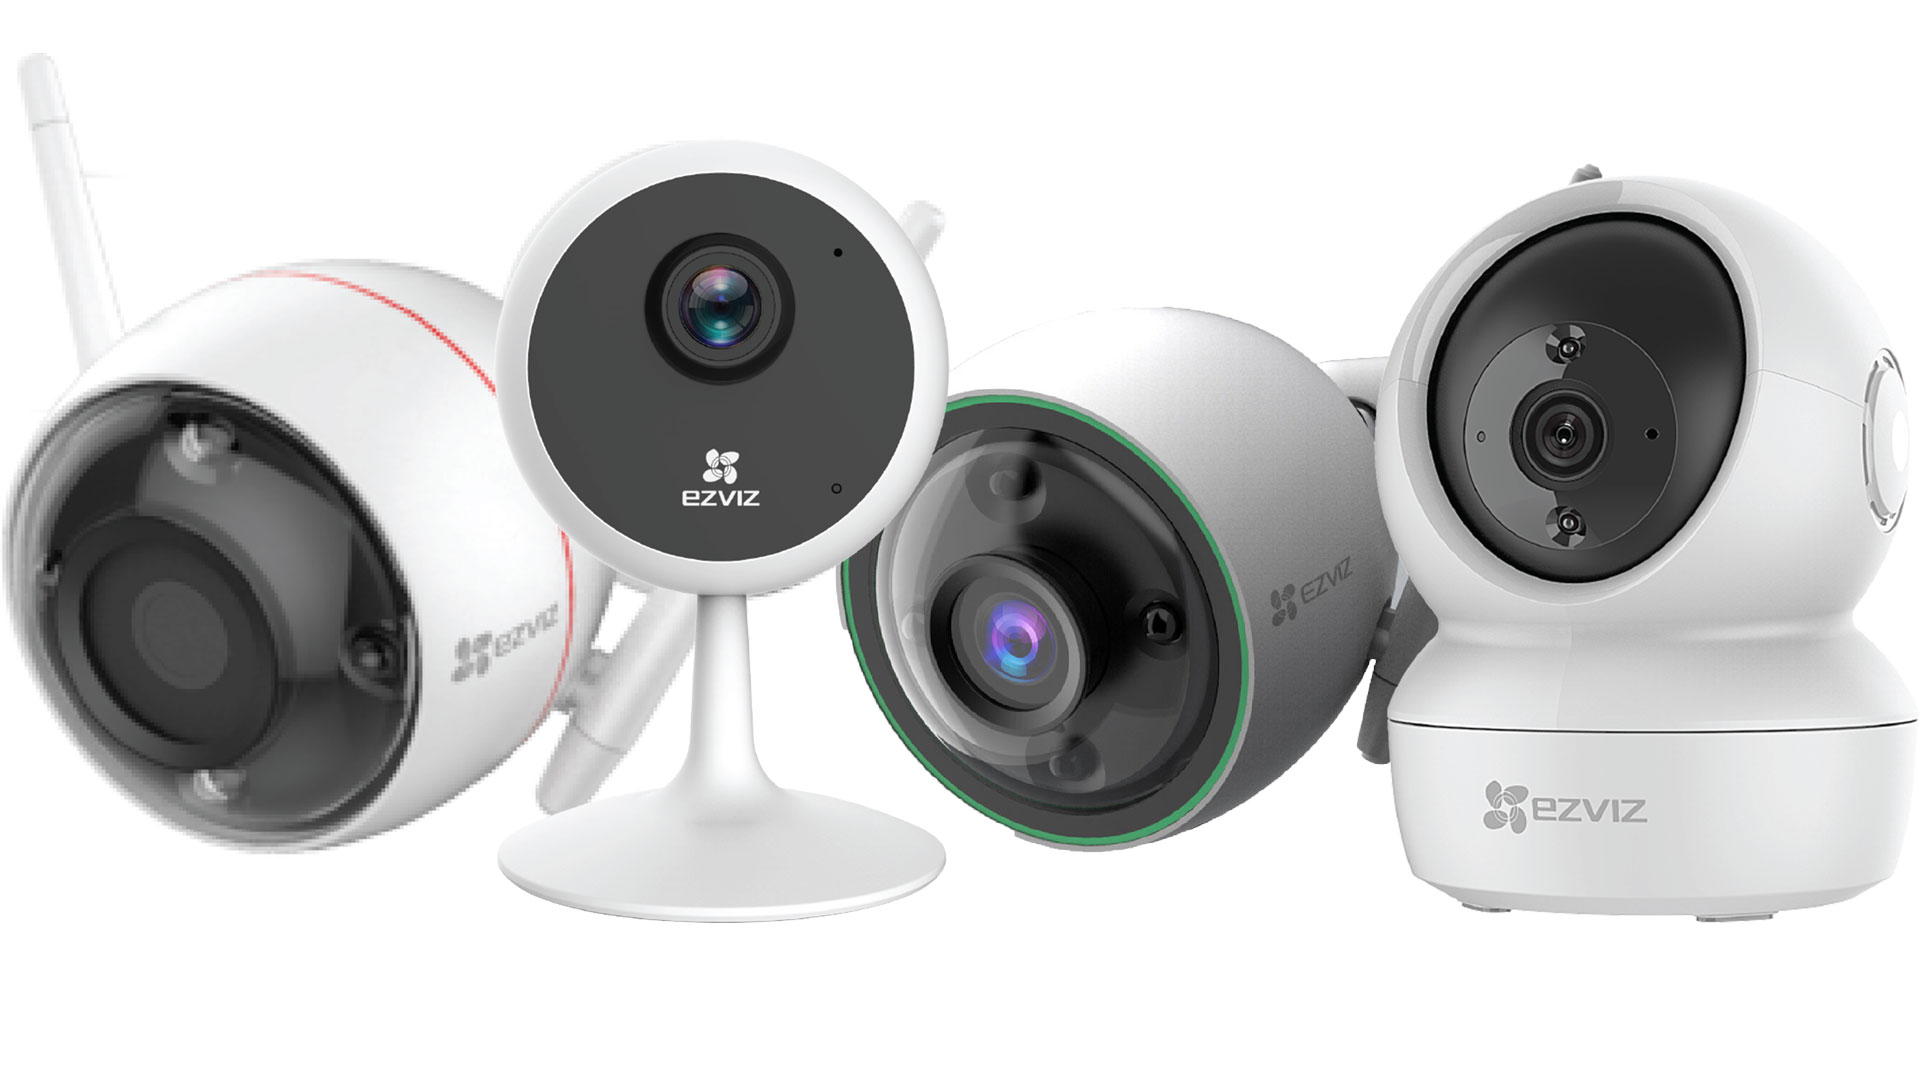 Prama Hikvision presents Ezviz smart home cameras and alarms